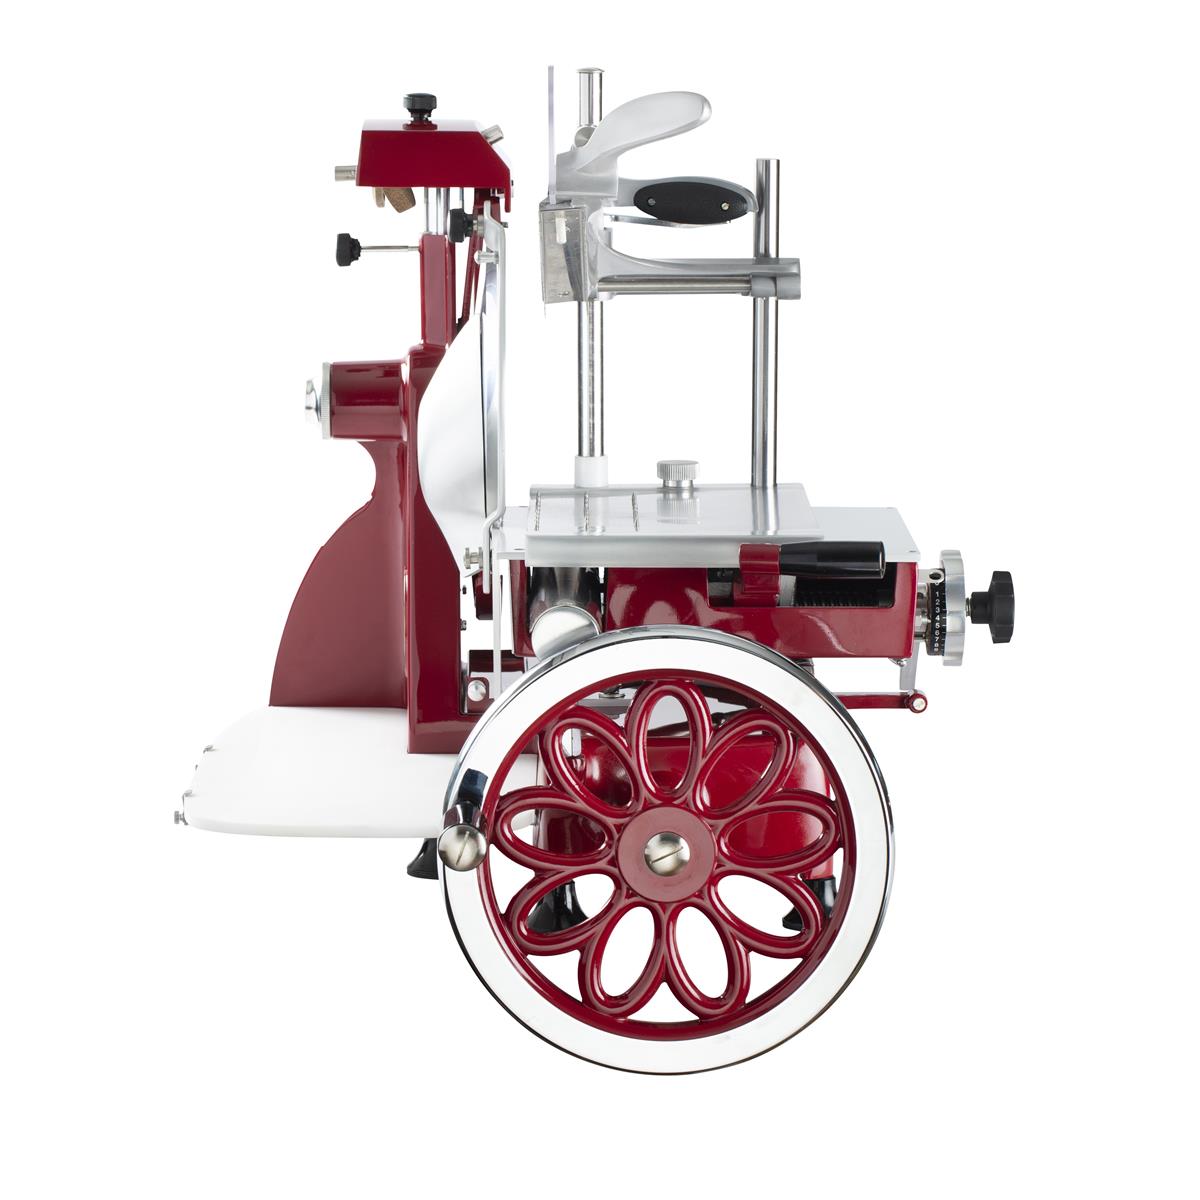 photo flywheel slicer 300 vo standard with fiorato flywheel - red